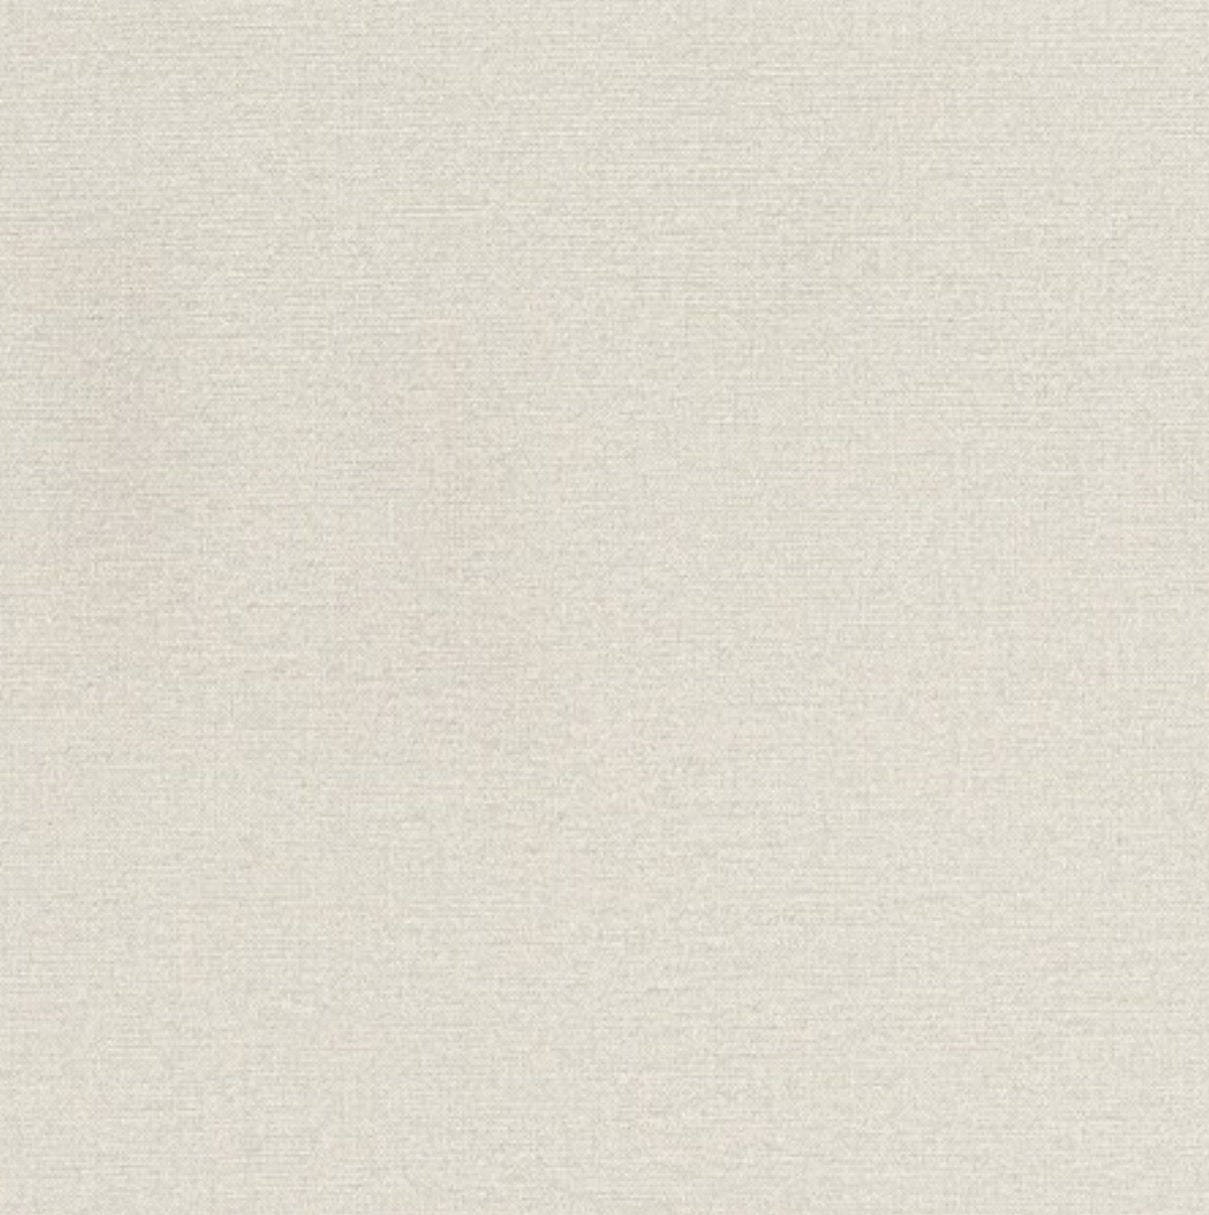 Advantage Zora Off-White Linen Texture Wallpaper